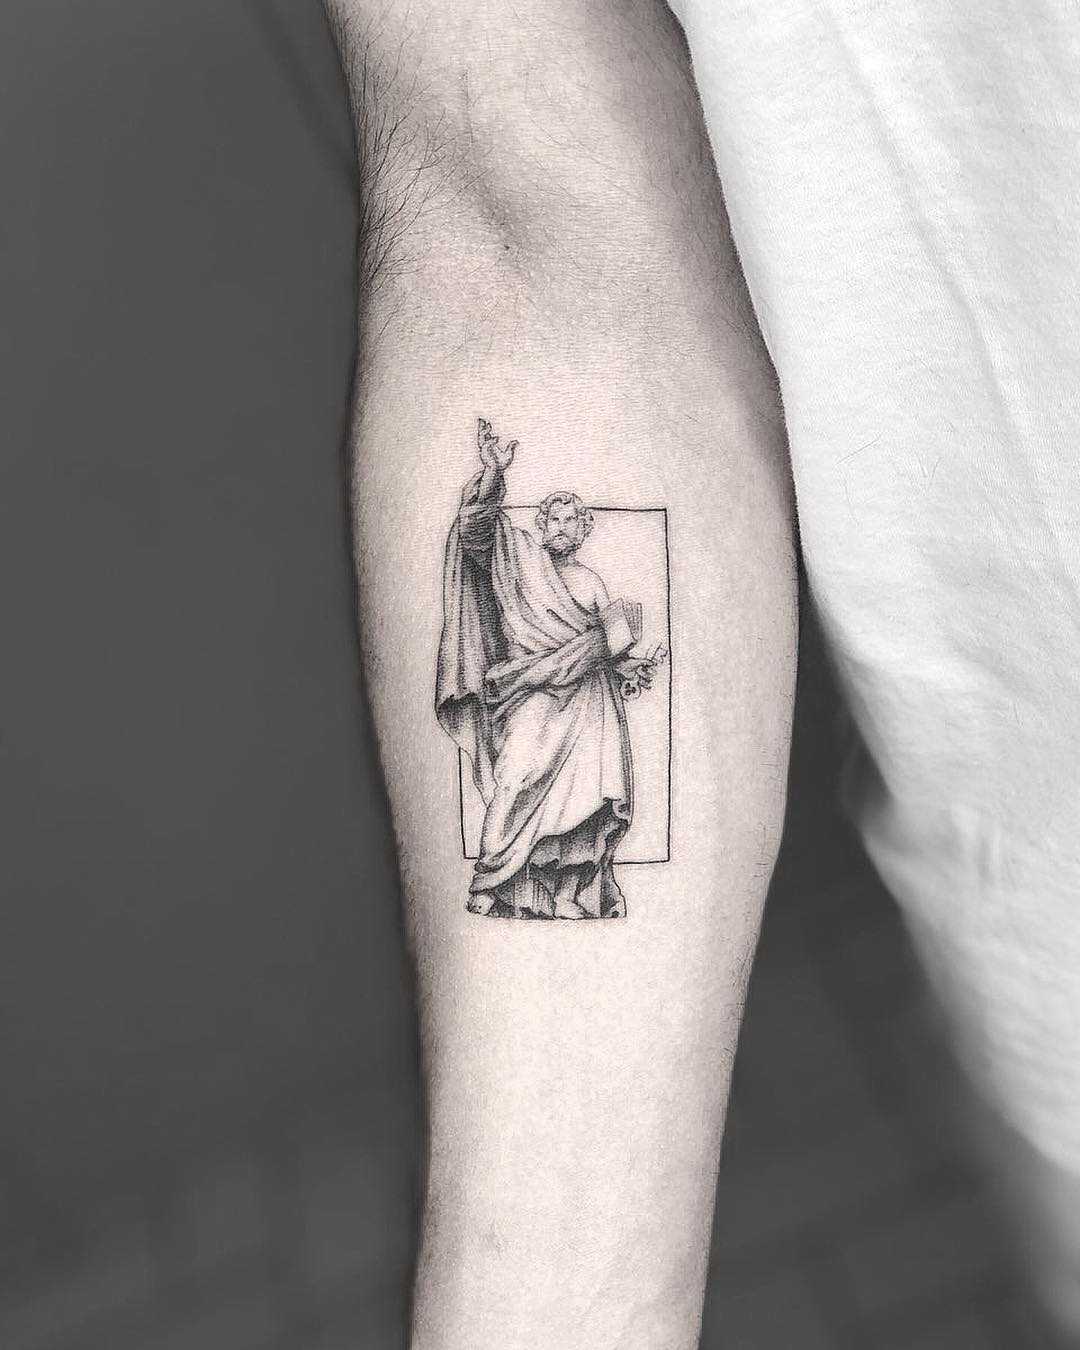 Single needle tattoo by Mr.Gulliver